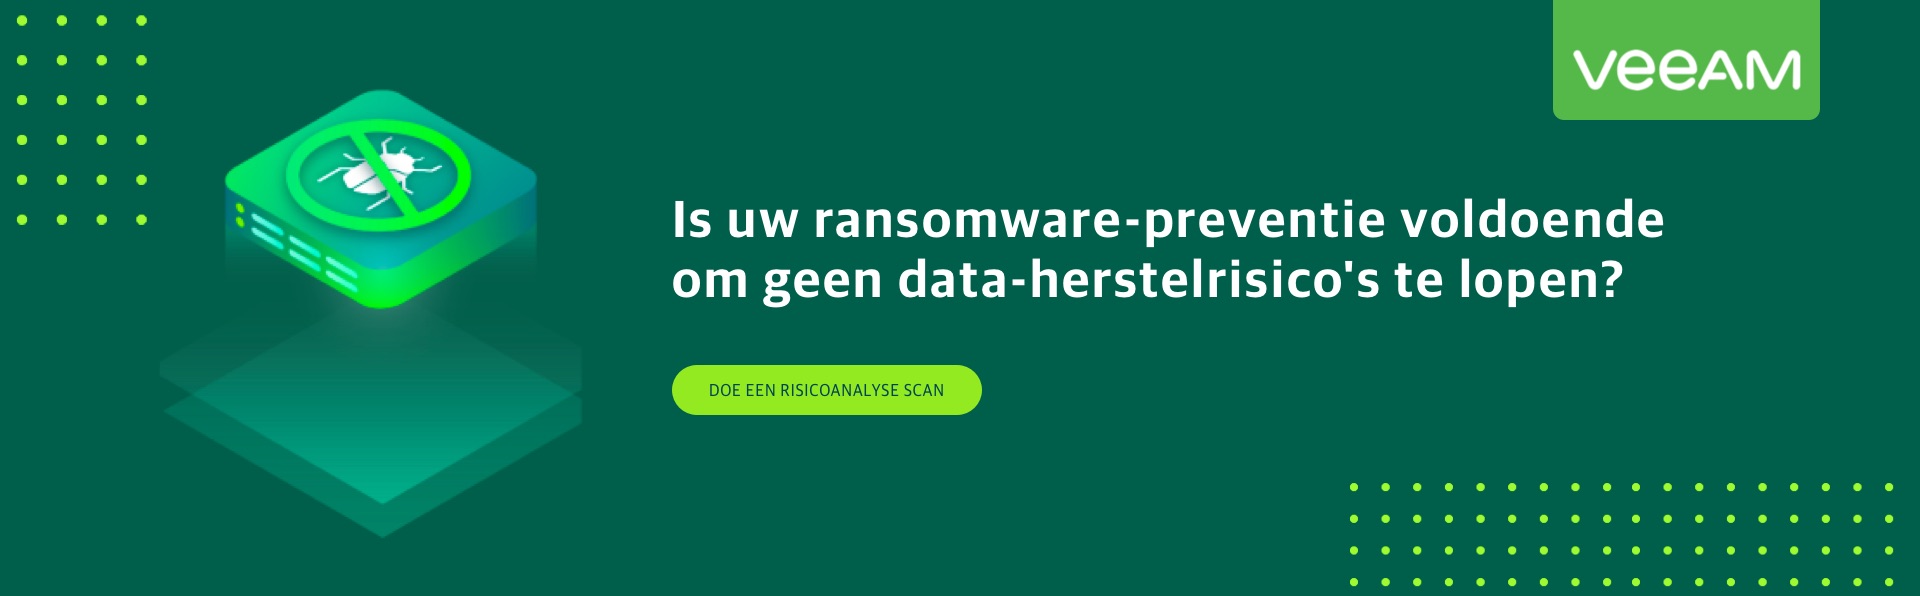 Veeam - Ransomware